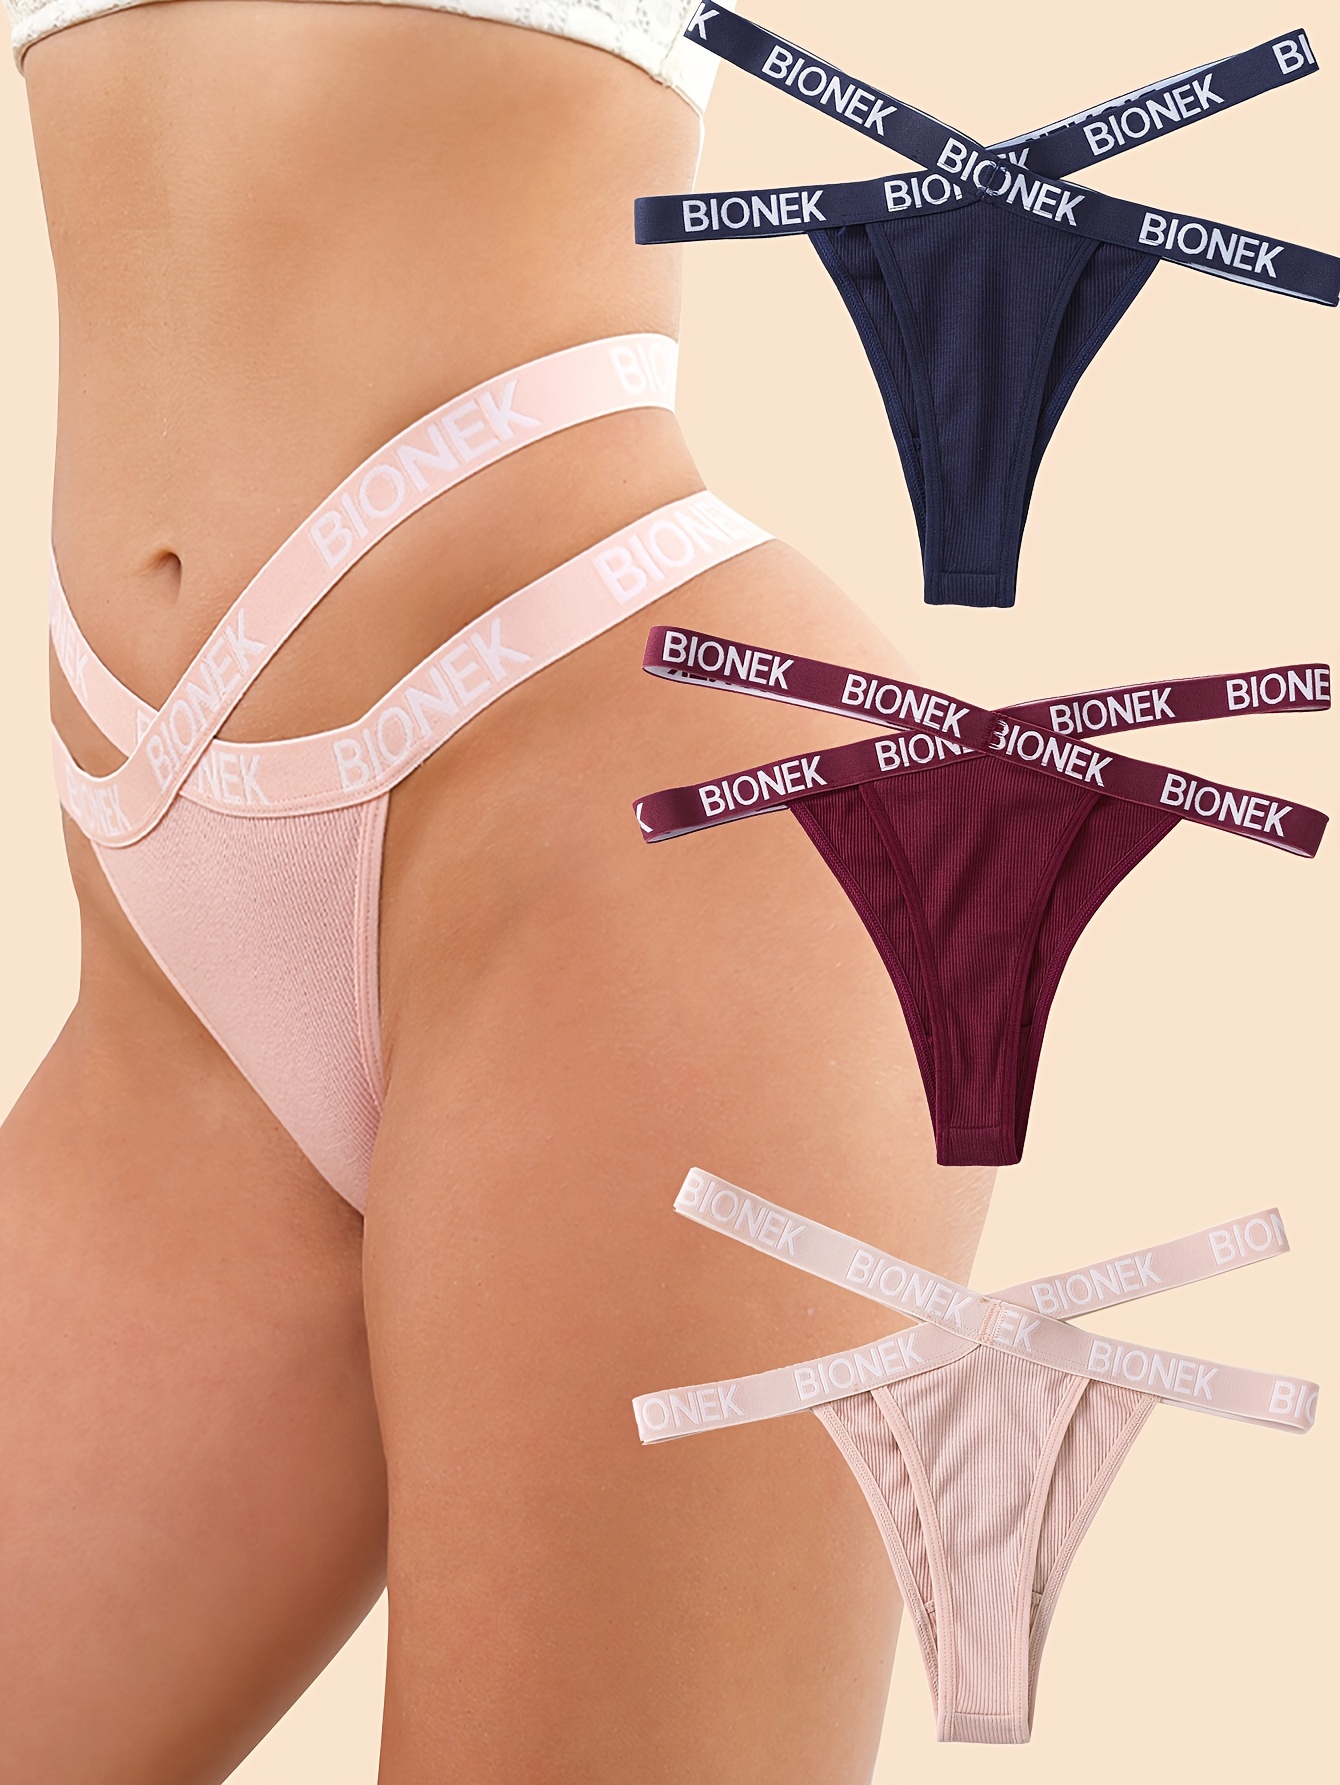 6-Pack Bionek Women's Sexy No Show Thongs Cotton Underwear Panties